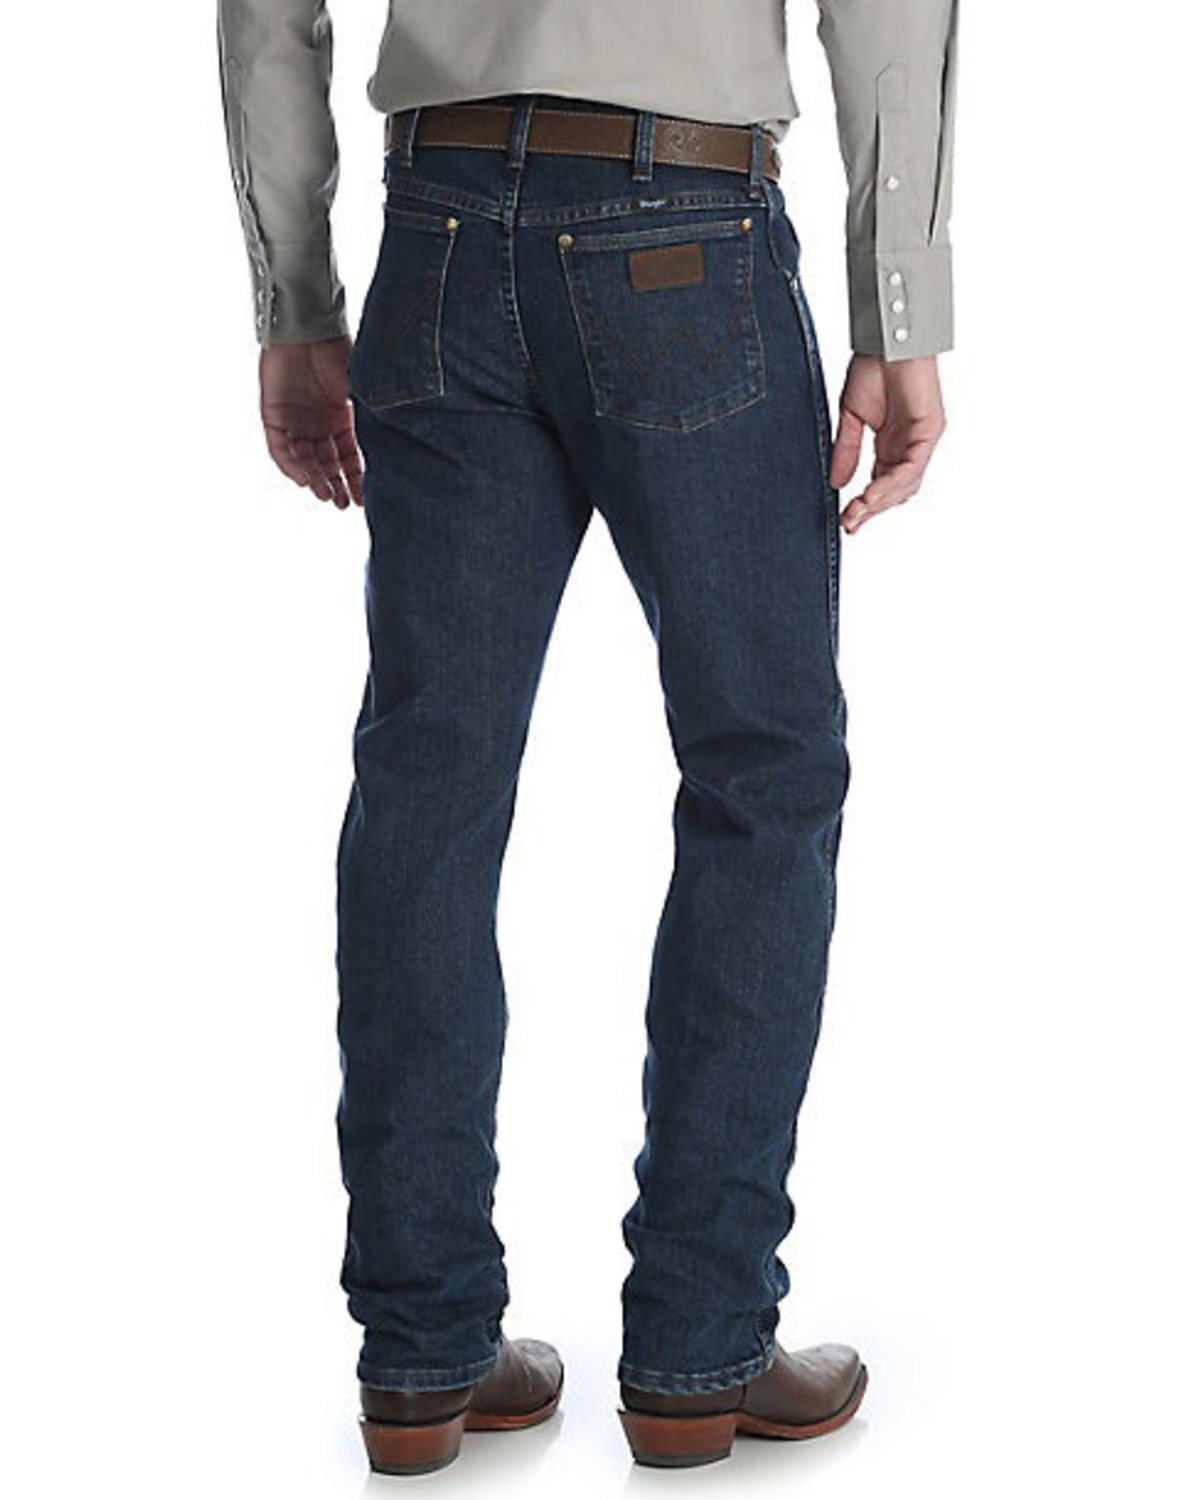 Wrangler Men's Midnight Rinse Premium Performance Cowboy Cut Jeans - Big & Tall